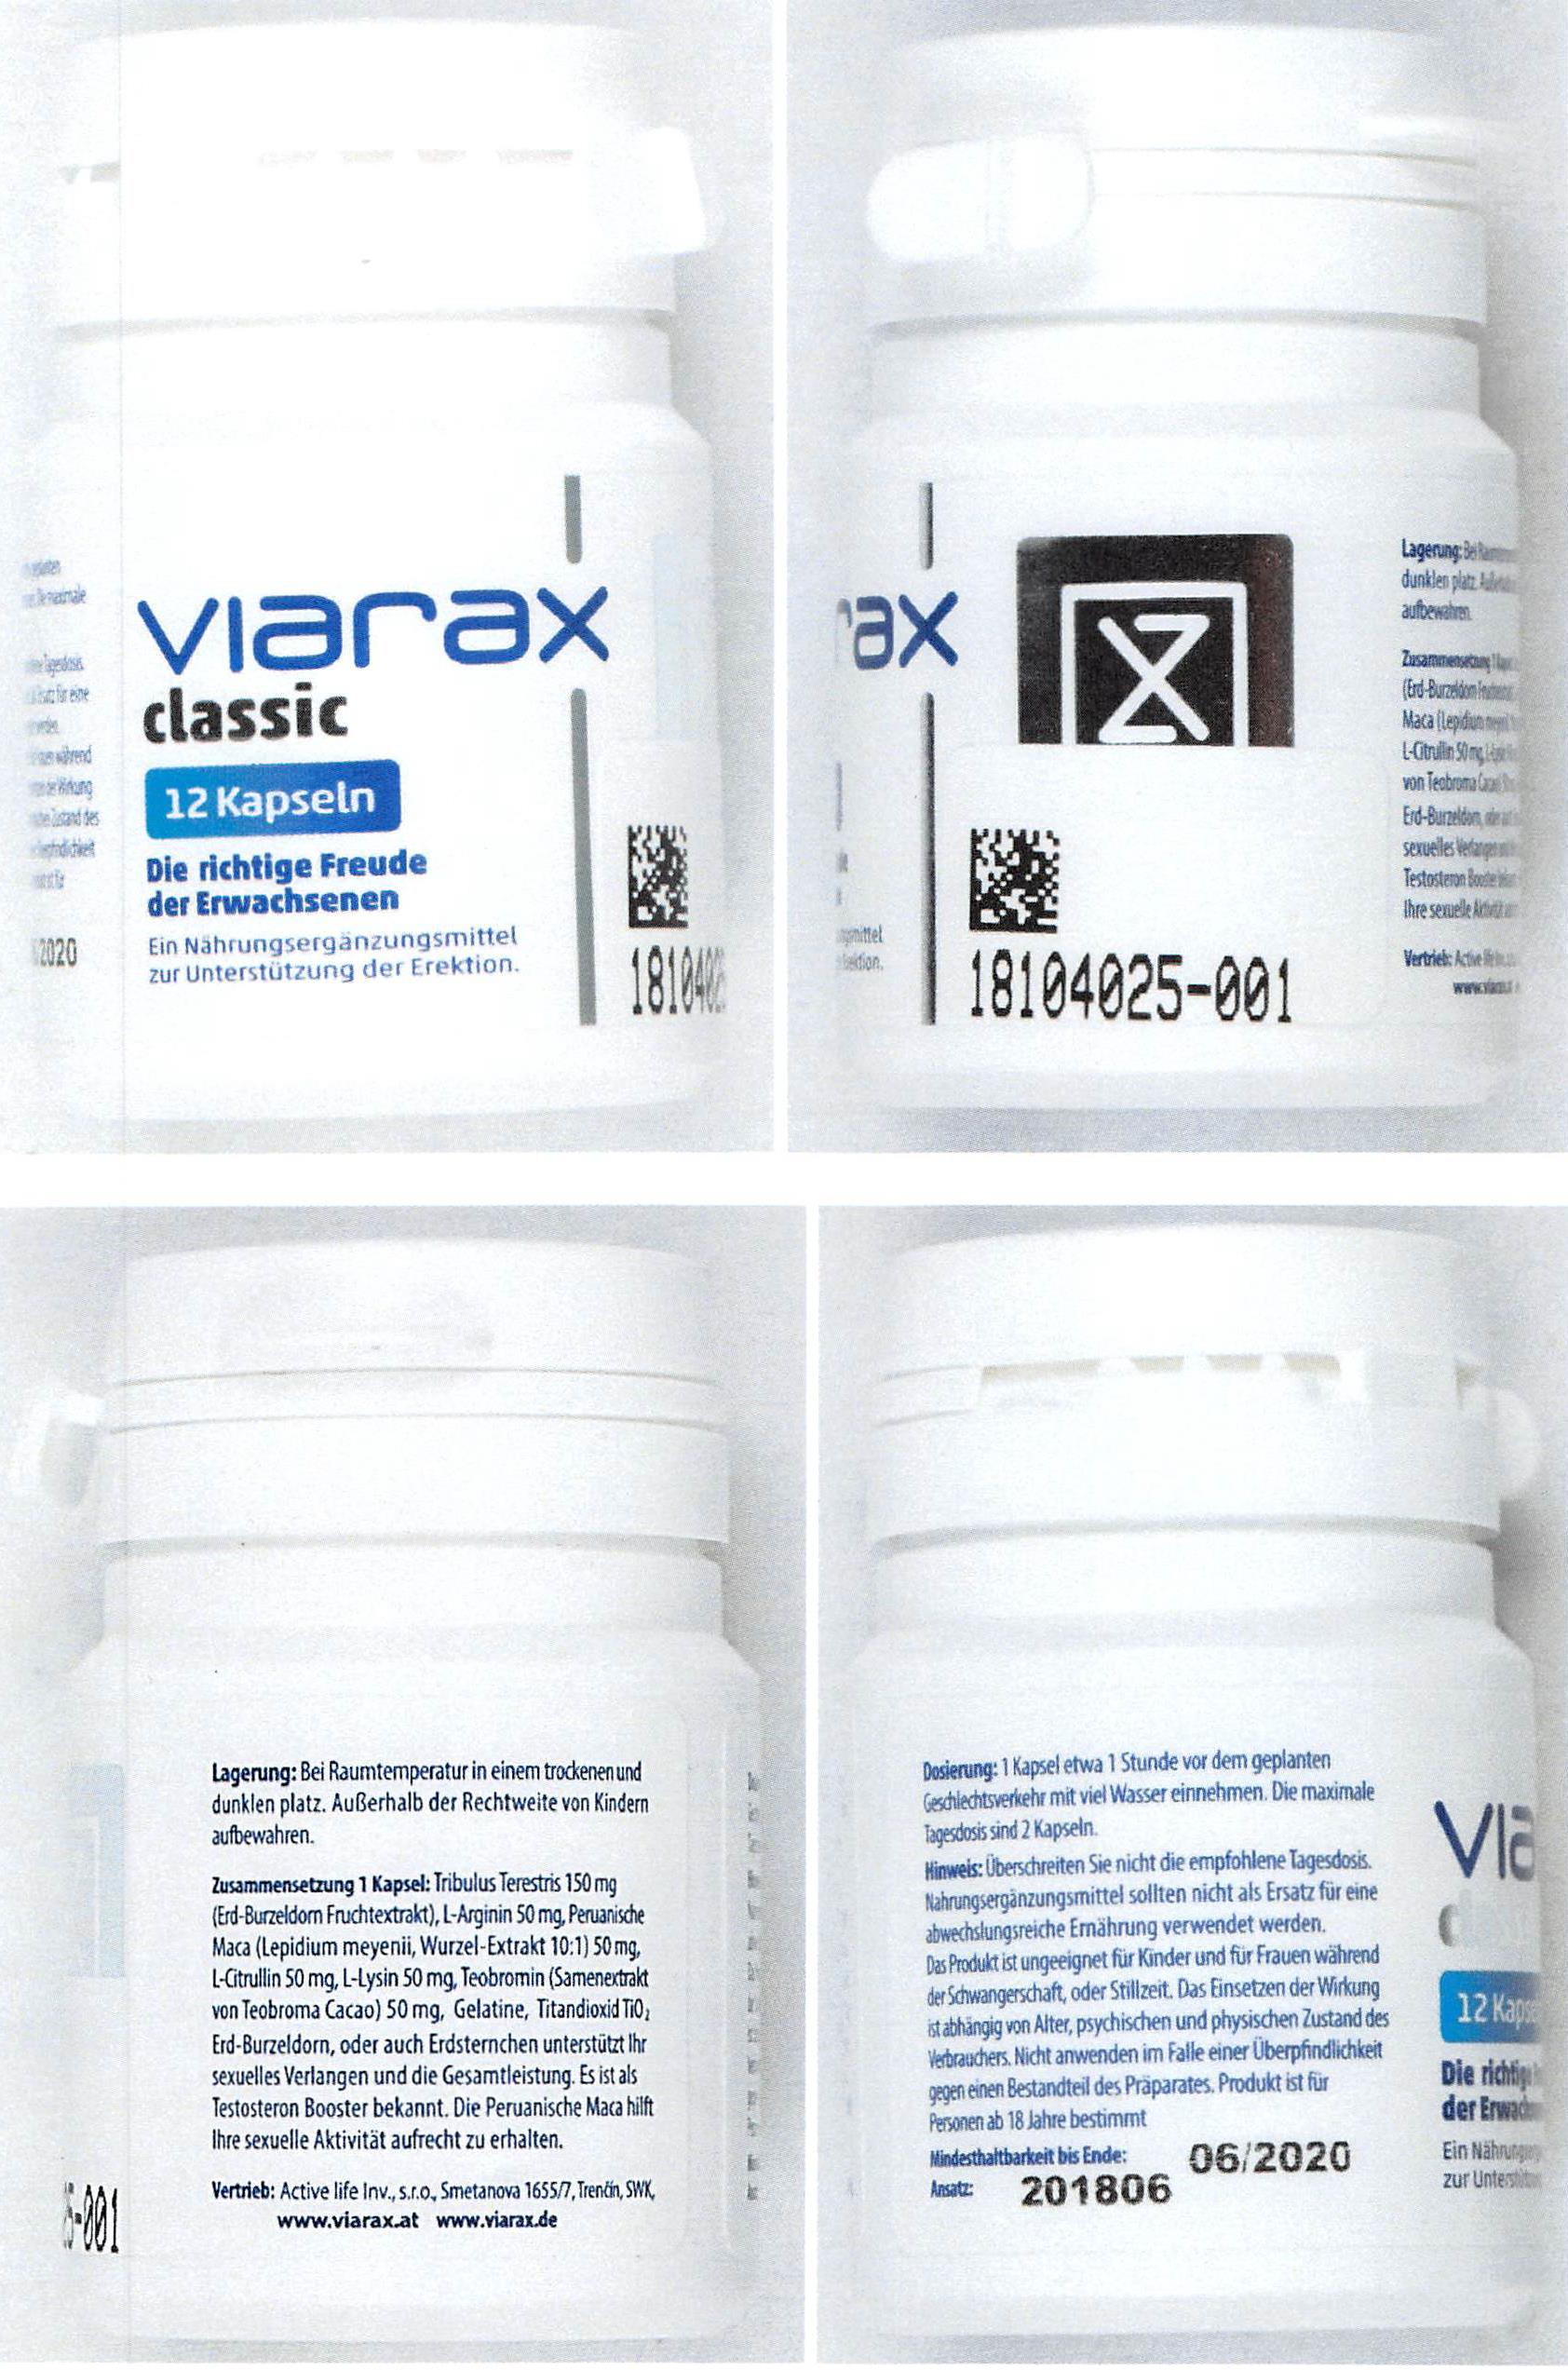 Viarax classic - Illegales Potenzmittel (Illegal potency enhancer)